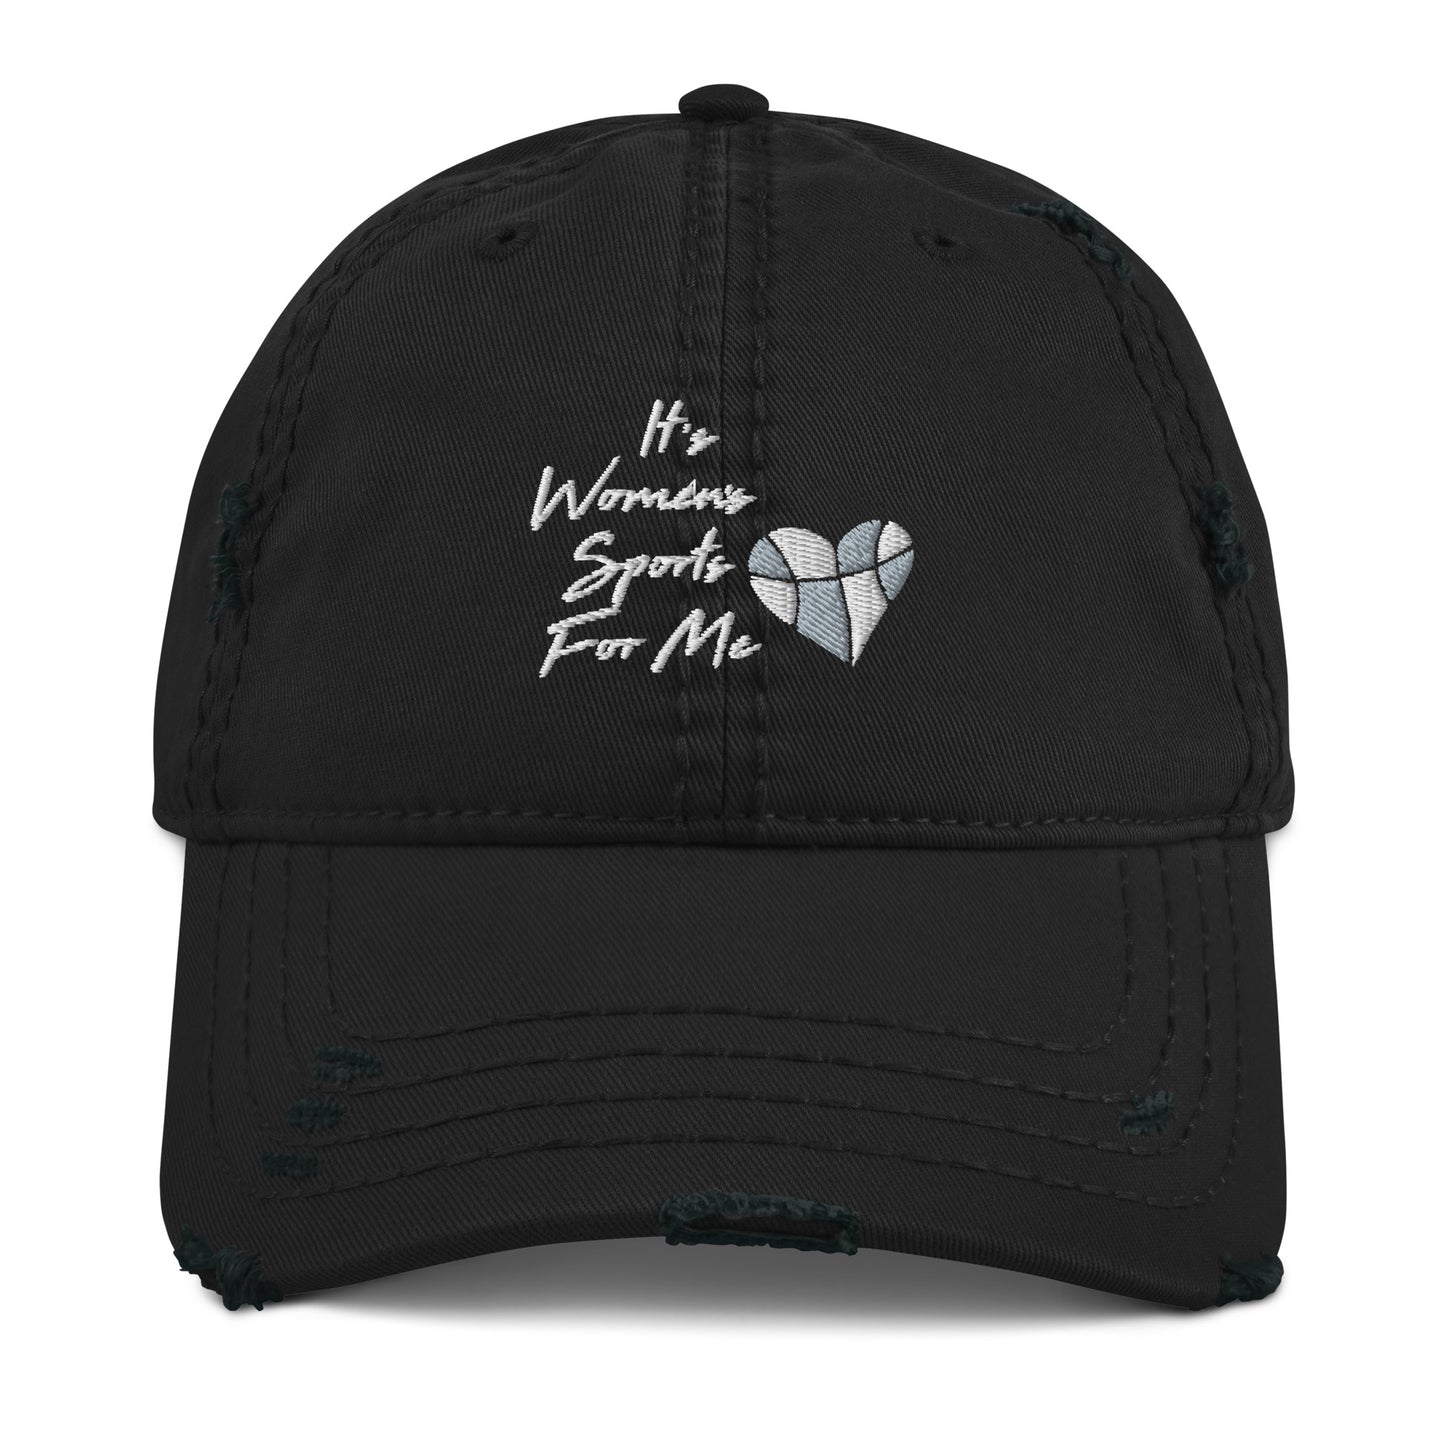 IWSFM WBB Distressed Hat